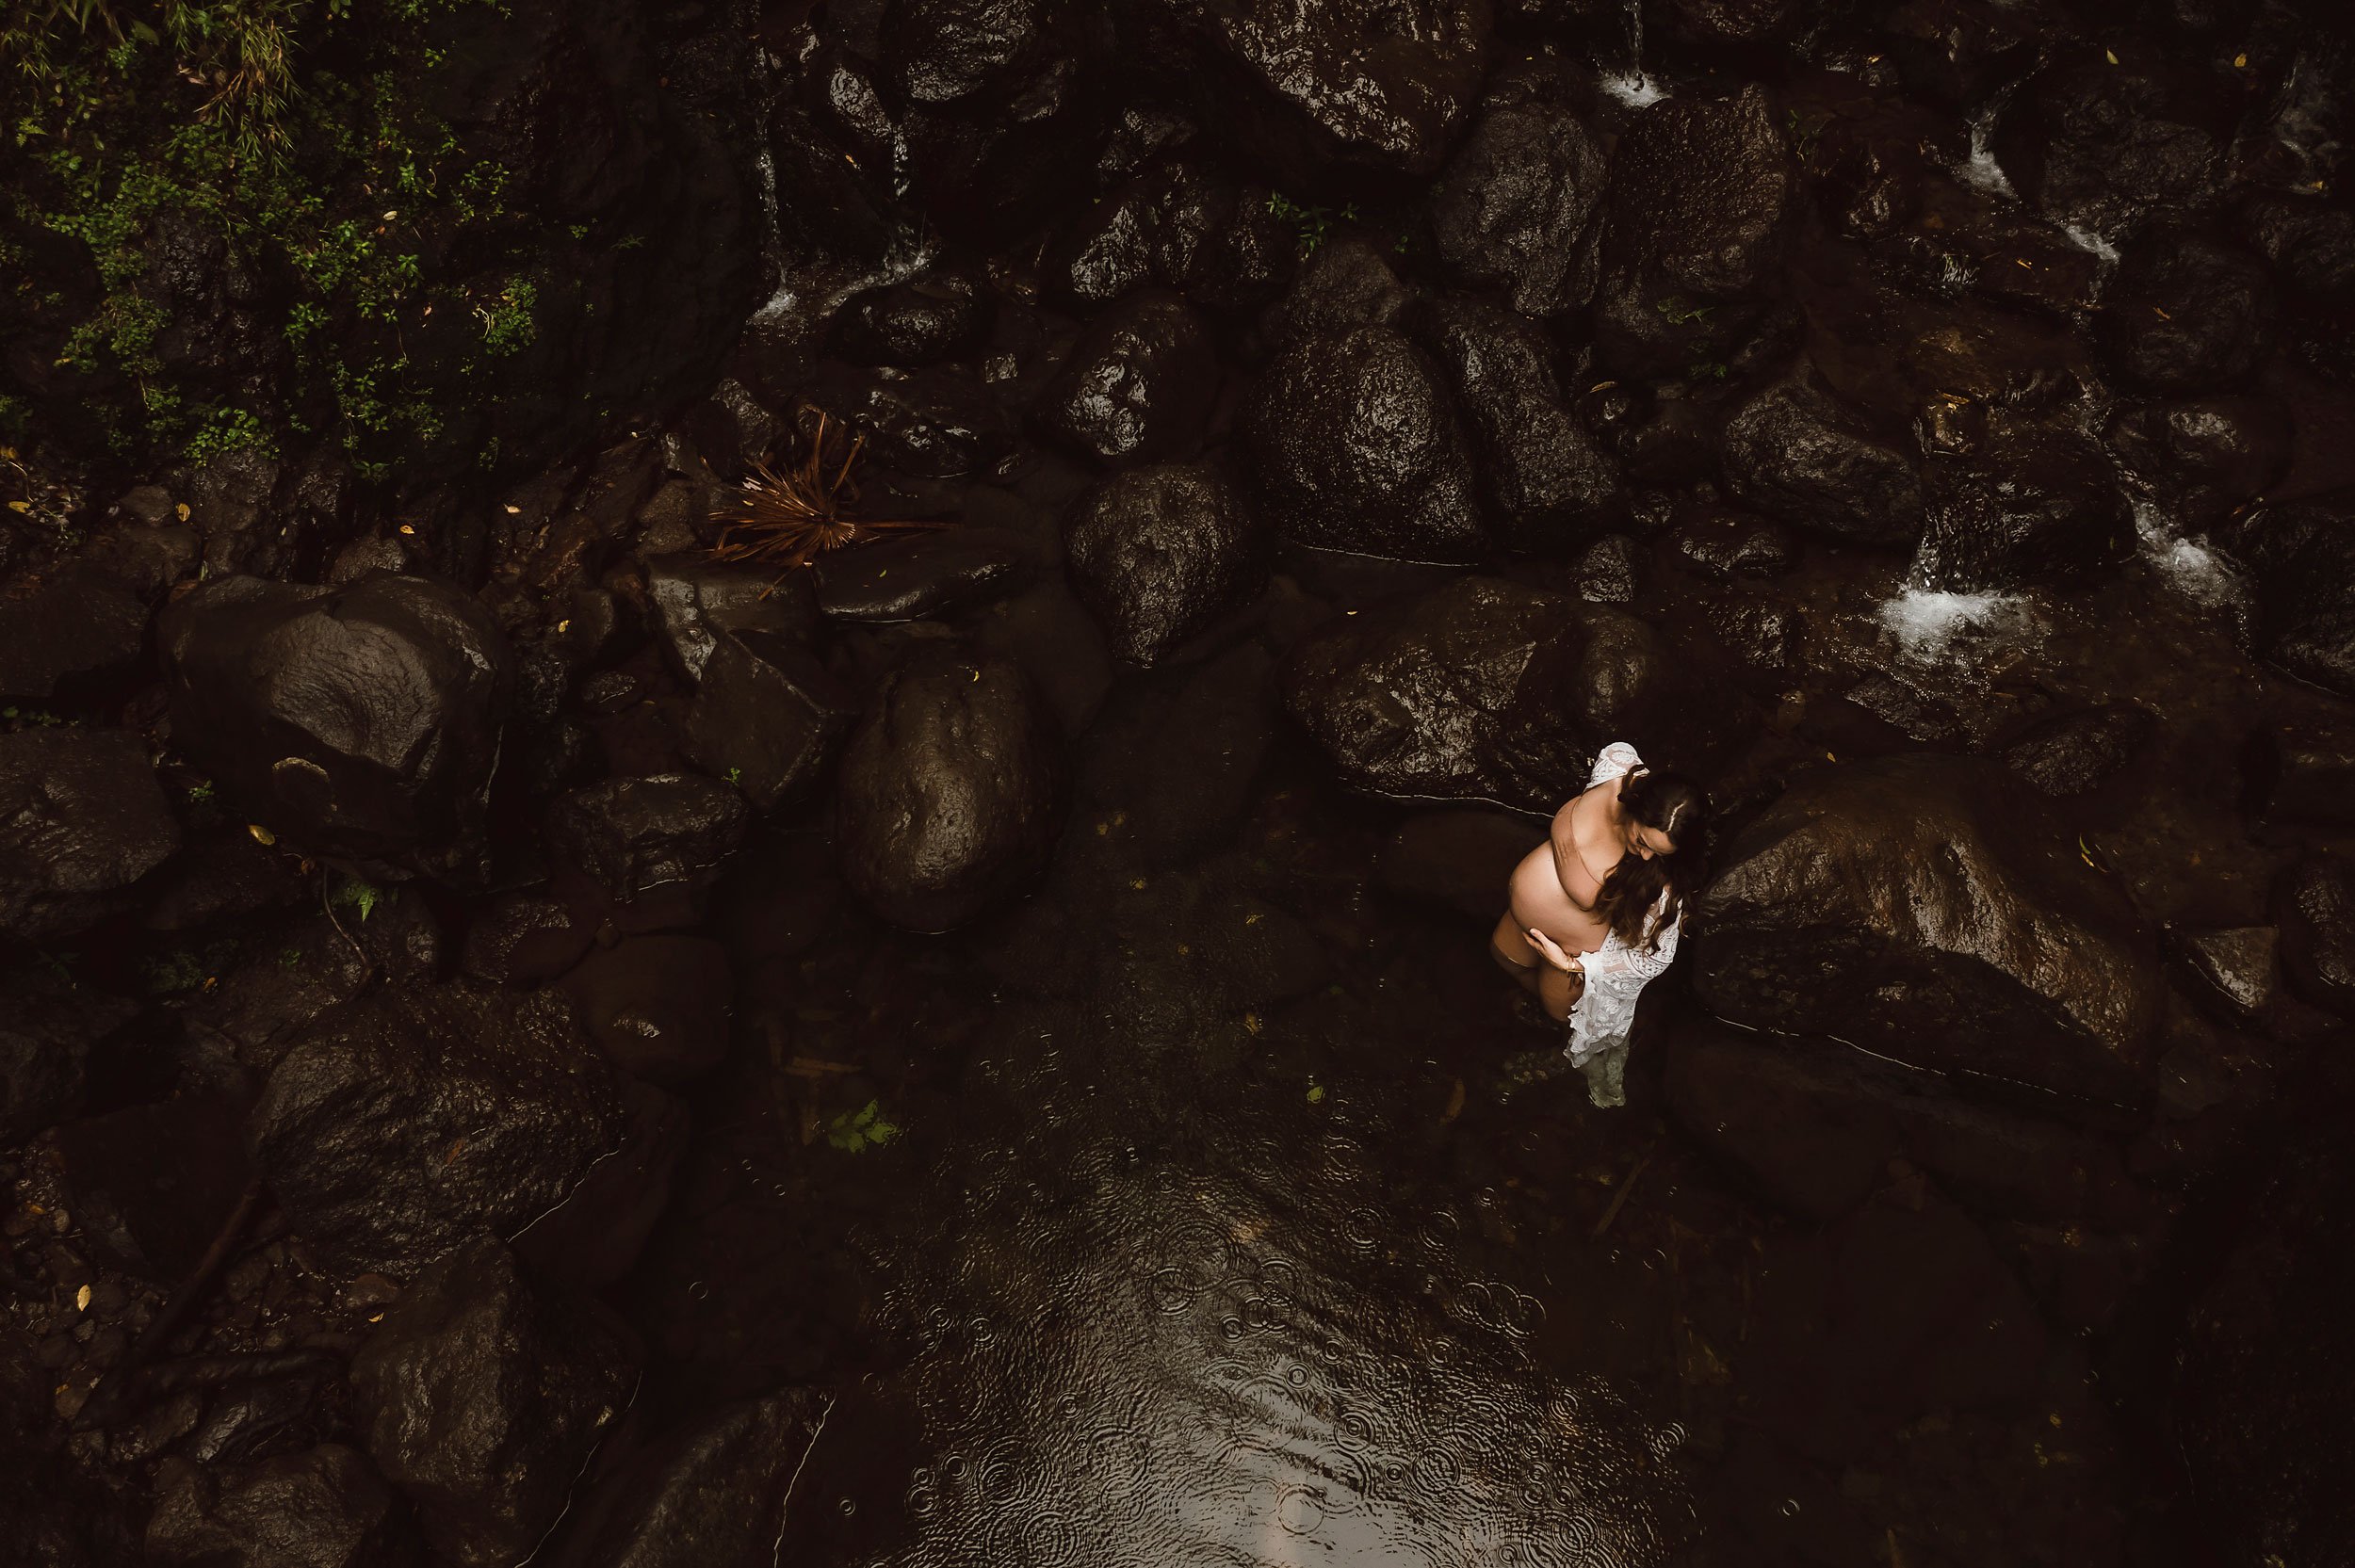 oahu-hawaii-waterfall-maternity-photos-lulumahu-21.jpg